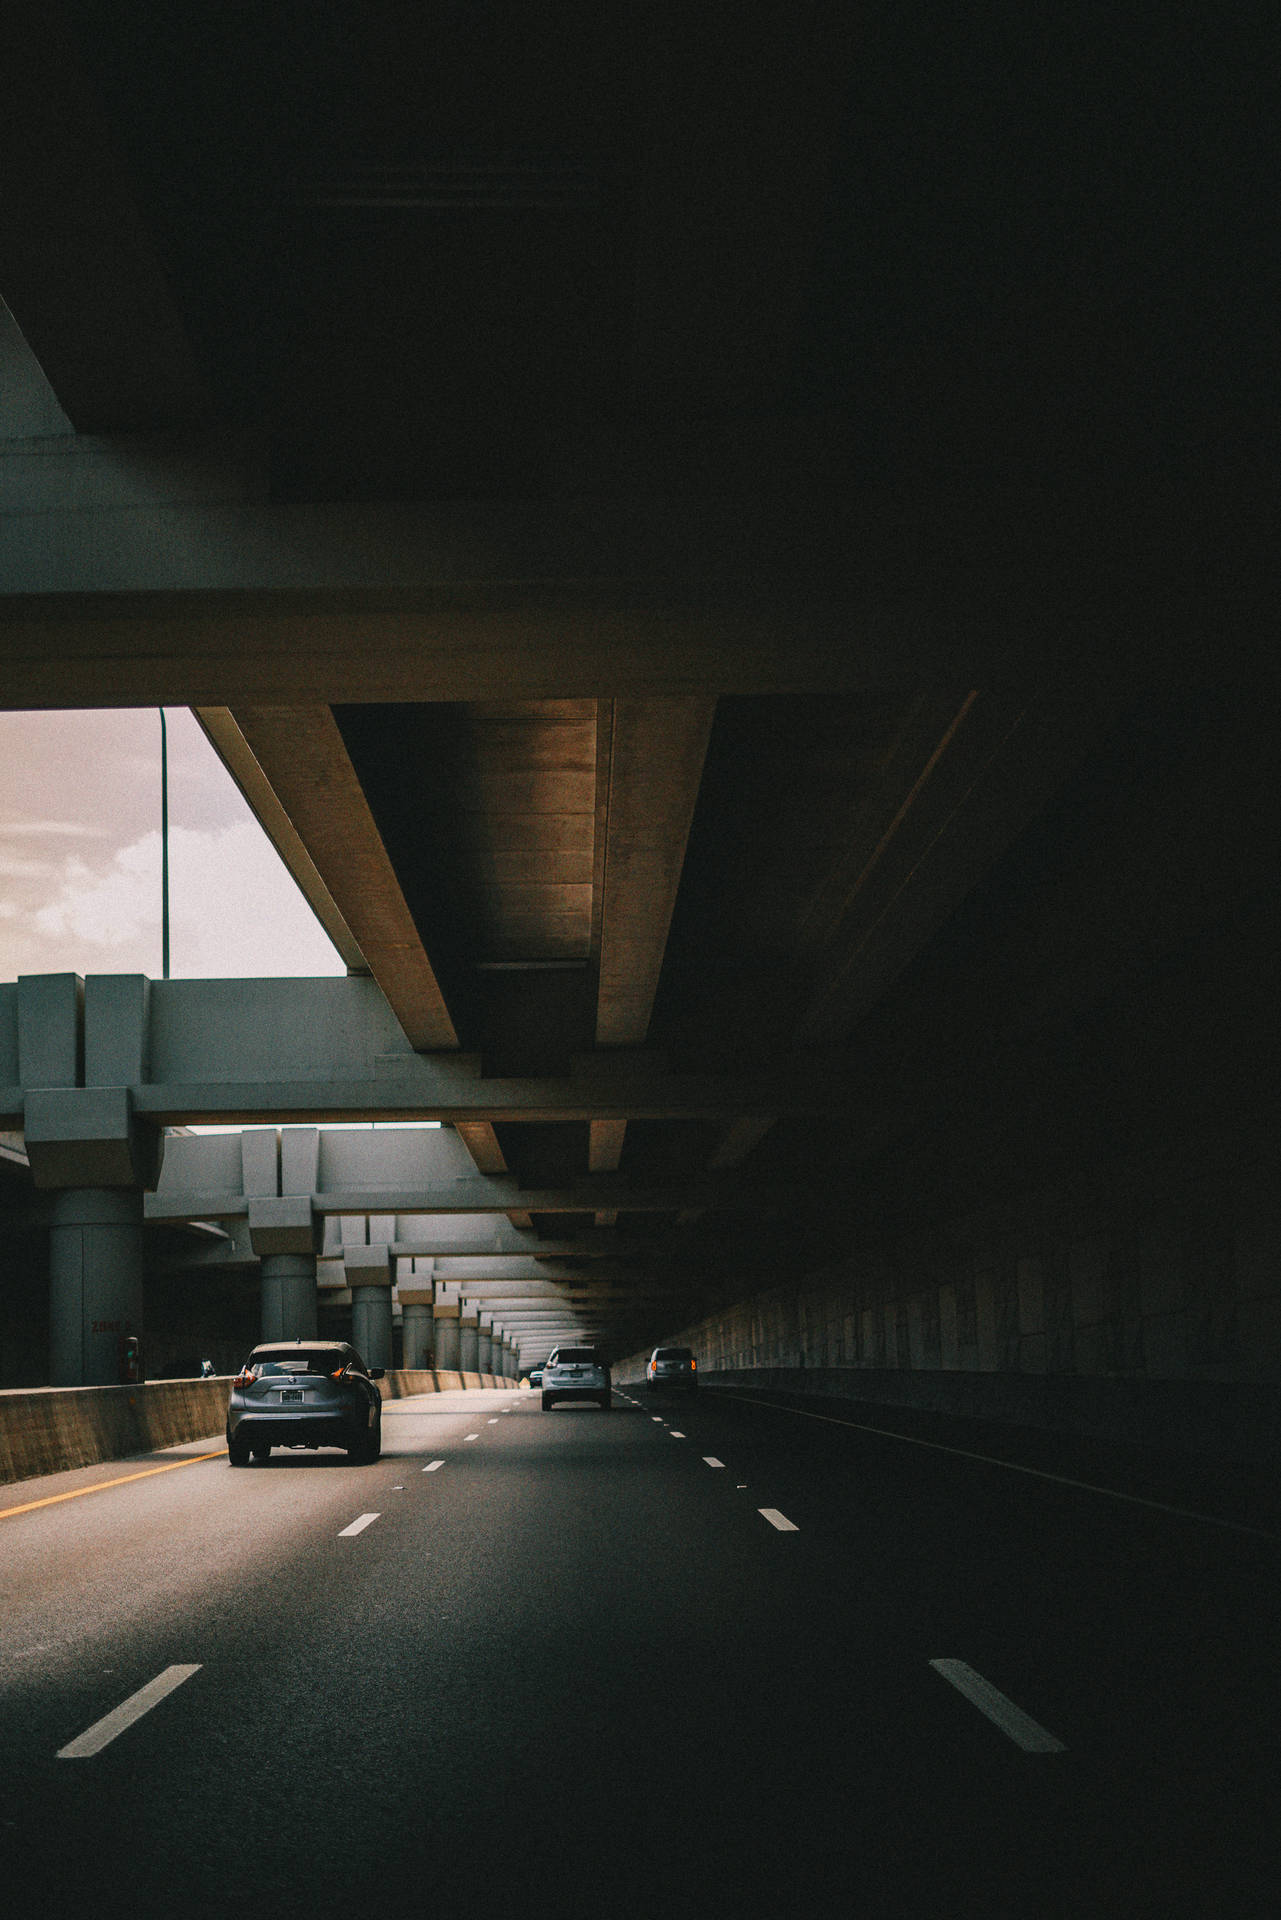 Under The Bridge And Driven Car Iphone Wallpaper